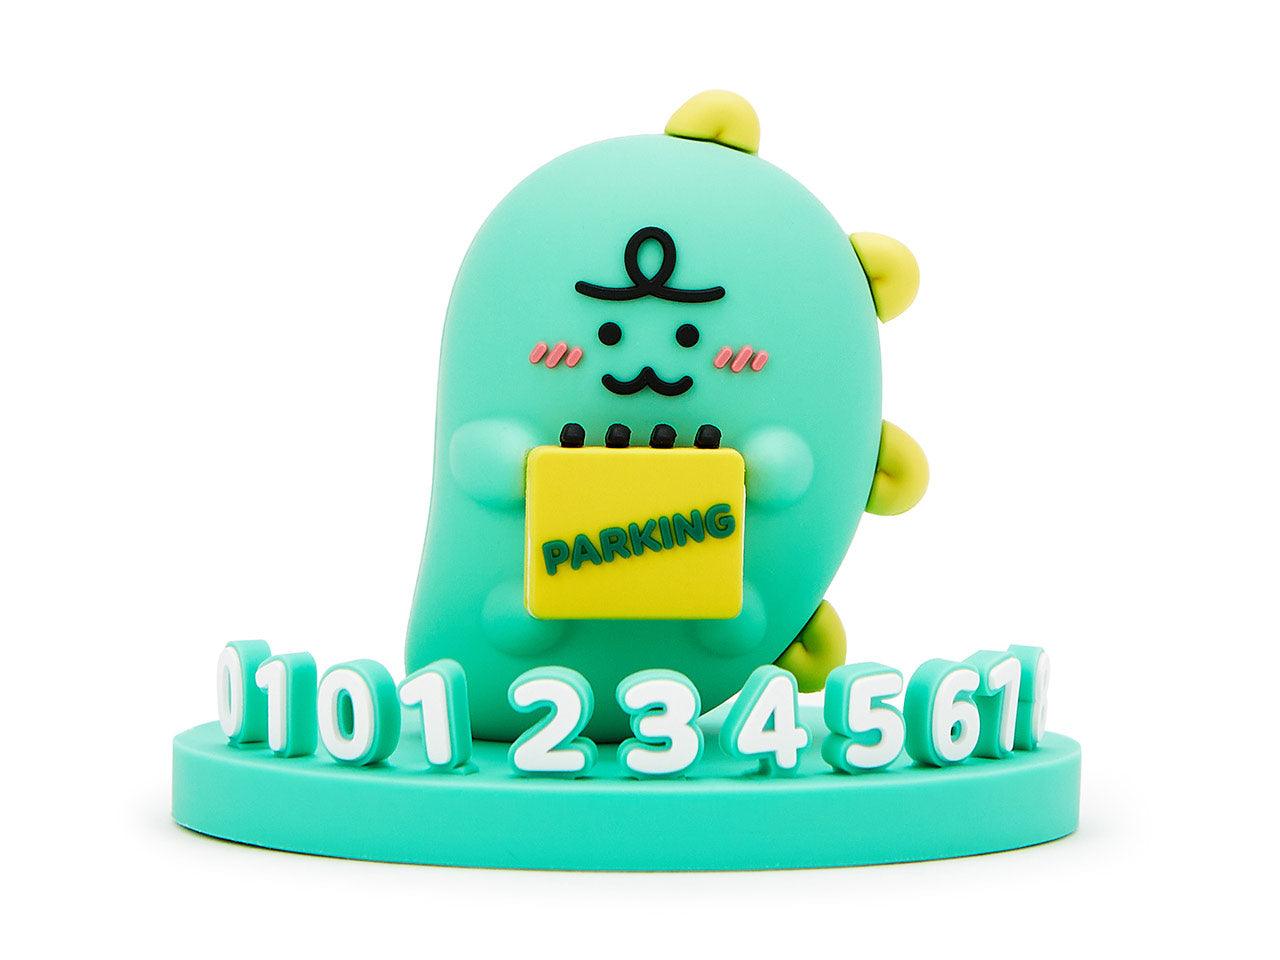 Kakao Friends Jordy Figure Phone Number Plate 停車號牌 - SOUL SIMPLE HK